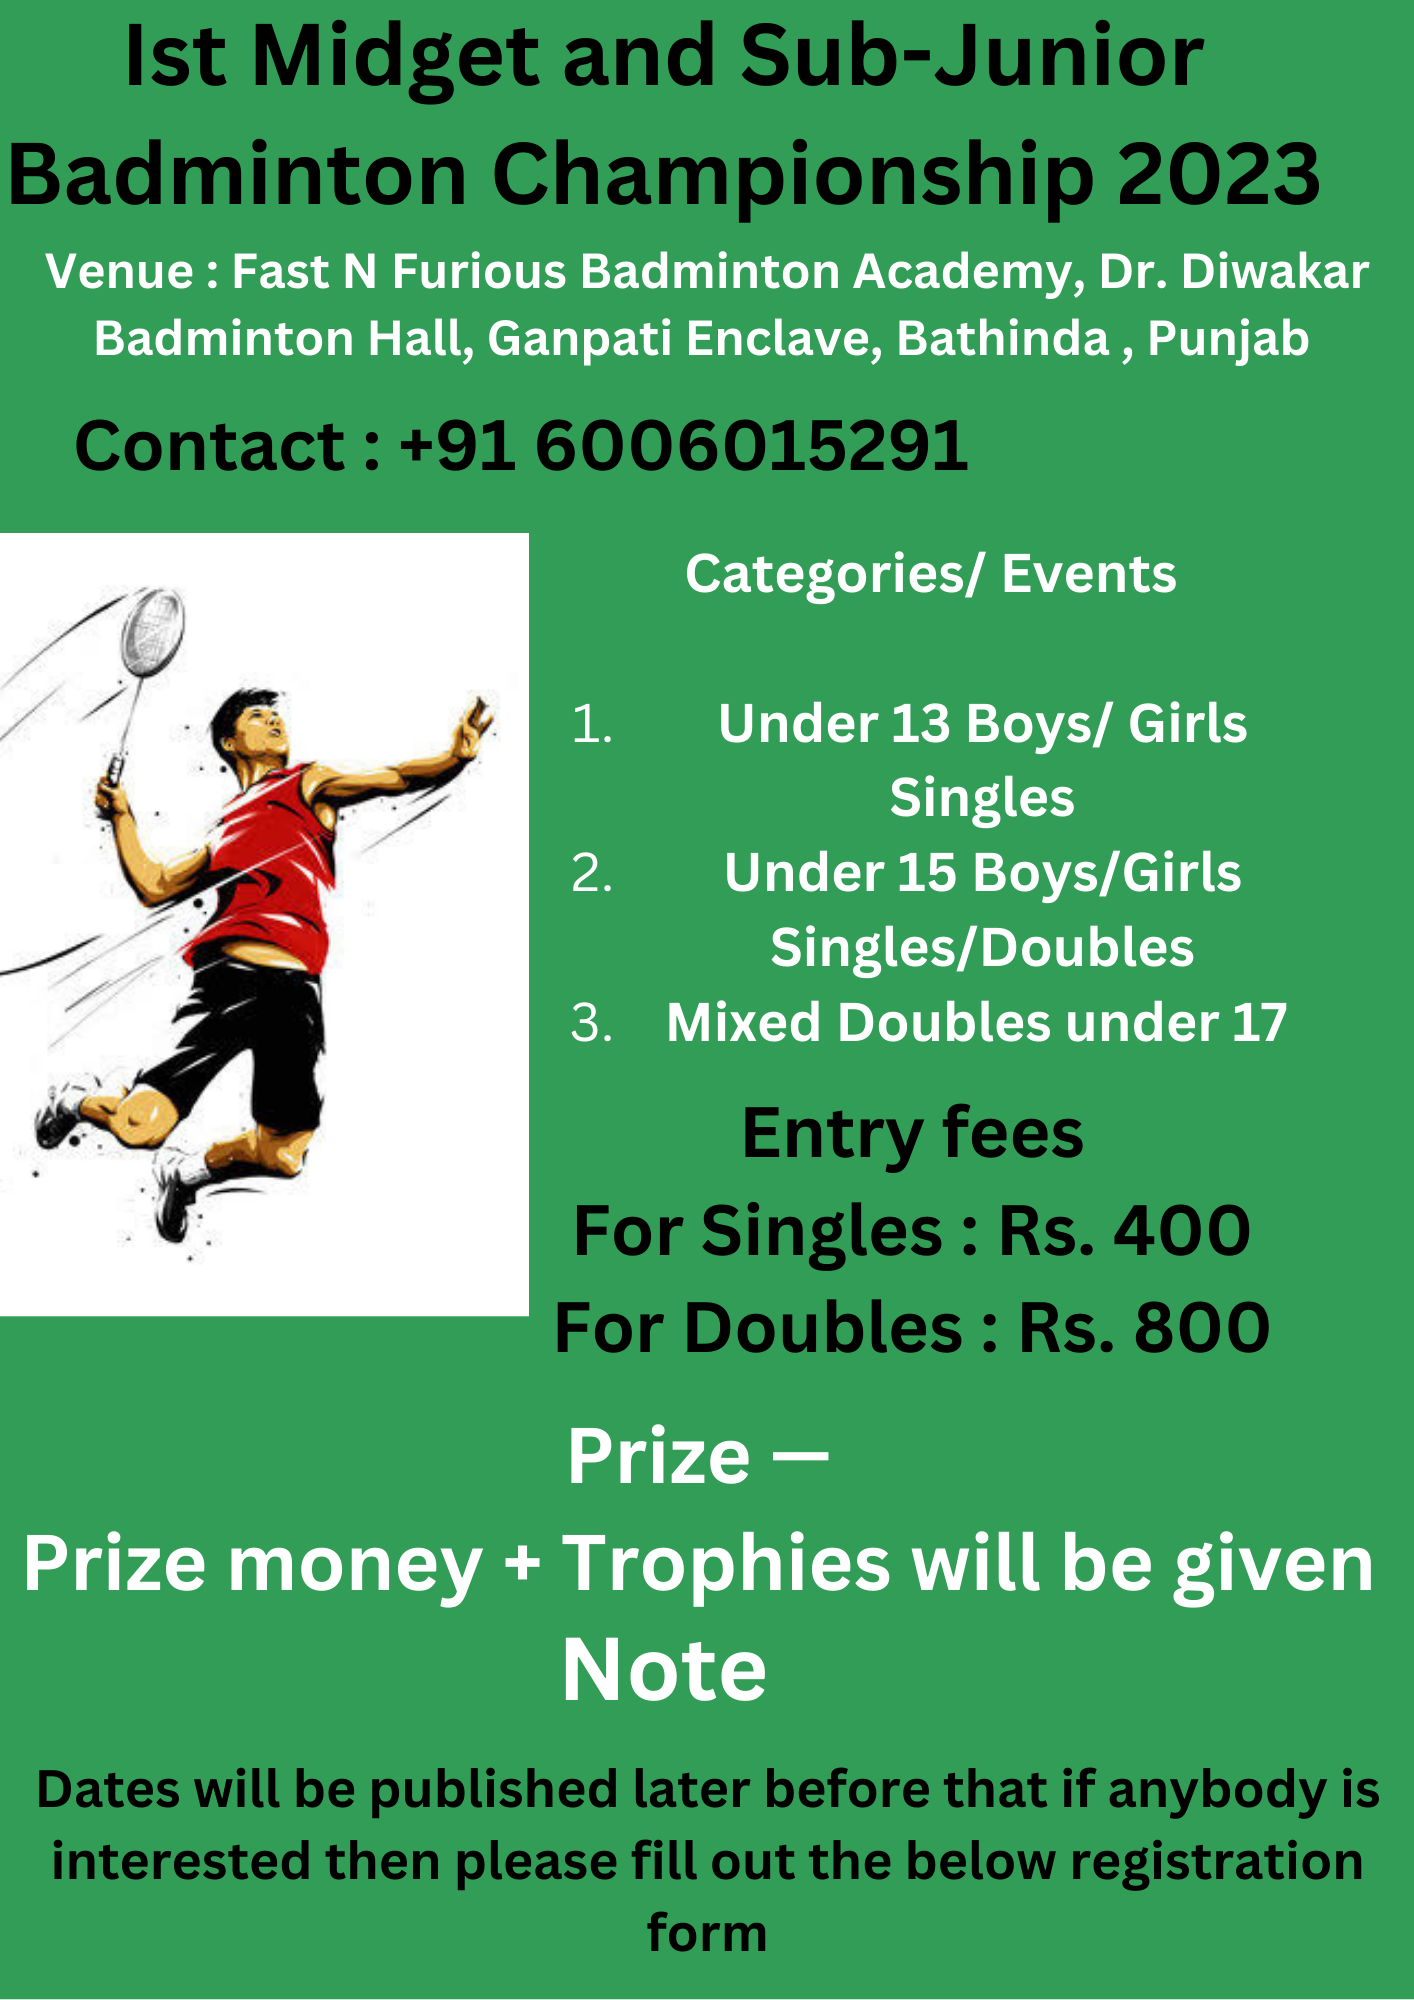 Fast N Furious Badminton Academy, Dr. Diwakar Badminton Hall, Ganpati Enclave, Bathinda